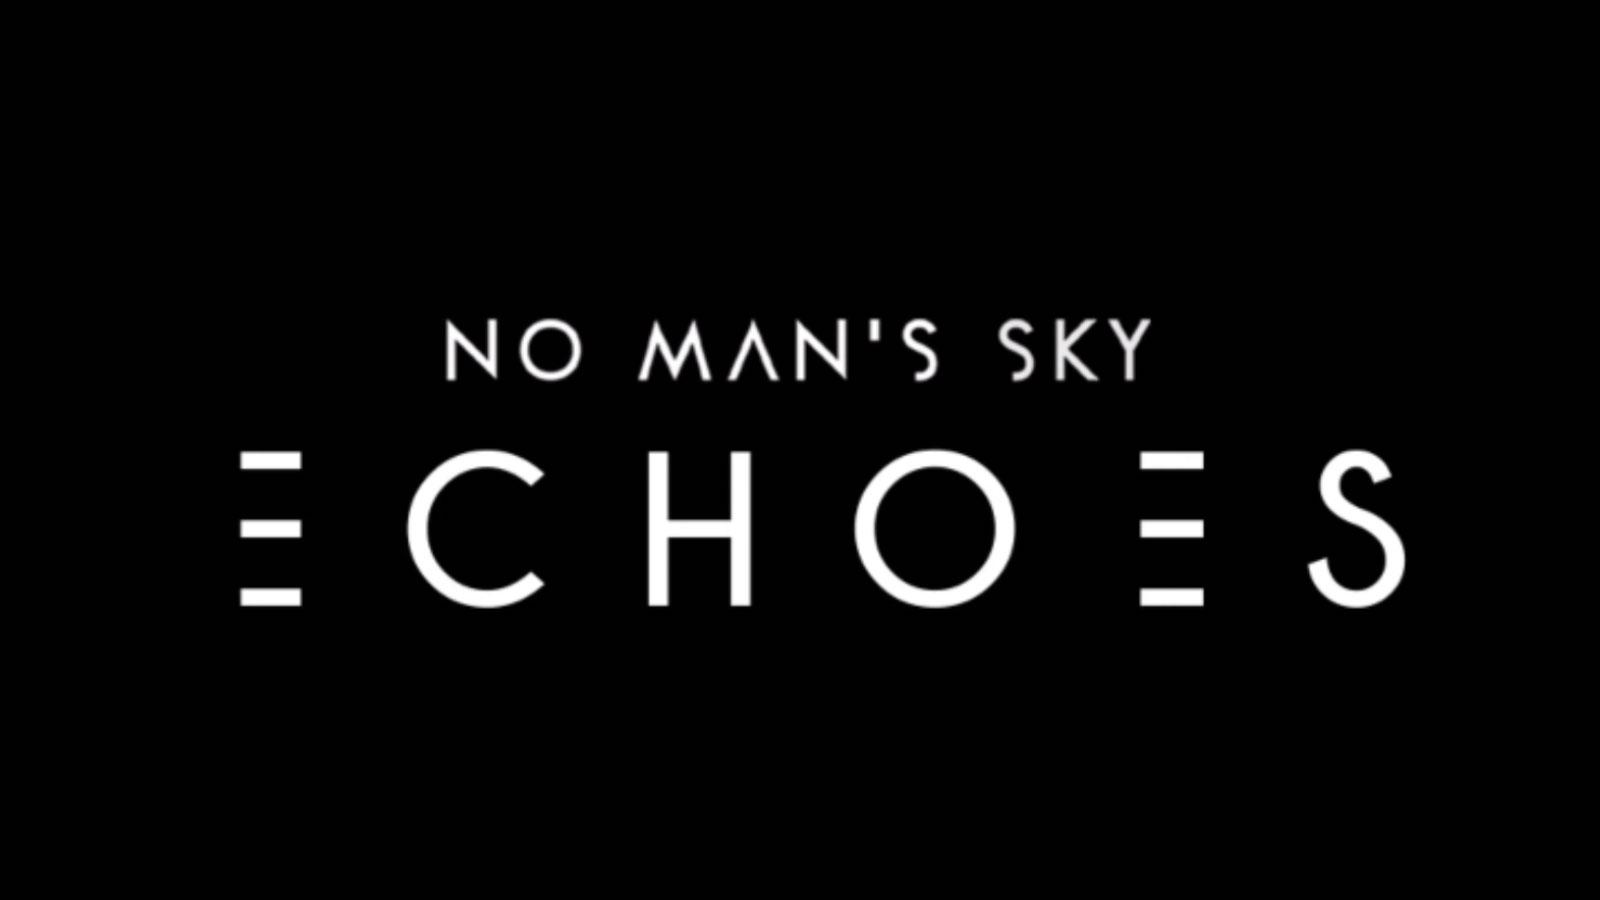 No Man's Sky Echoes